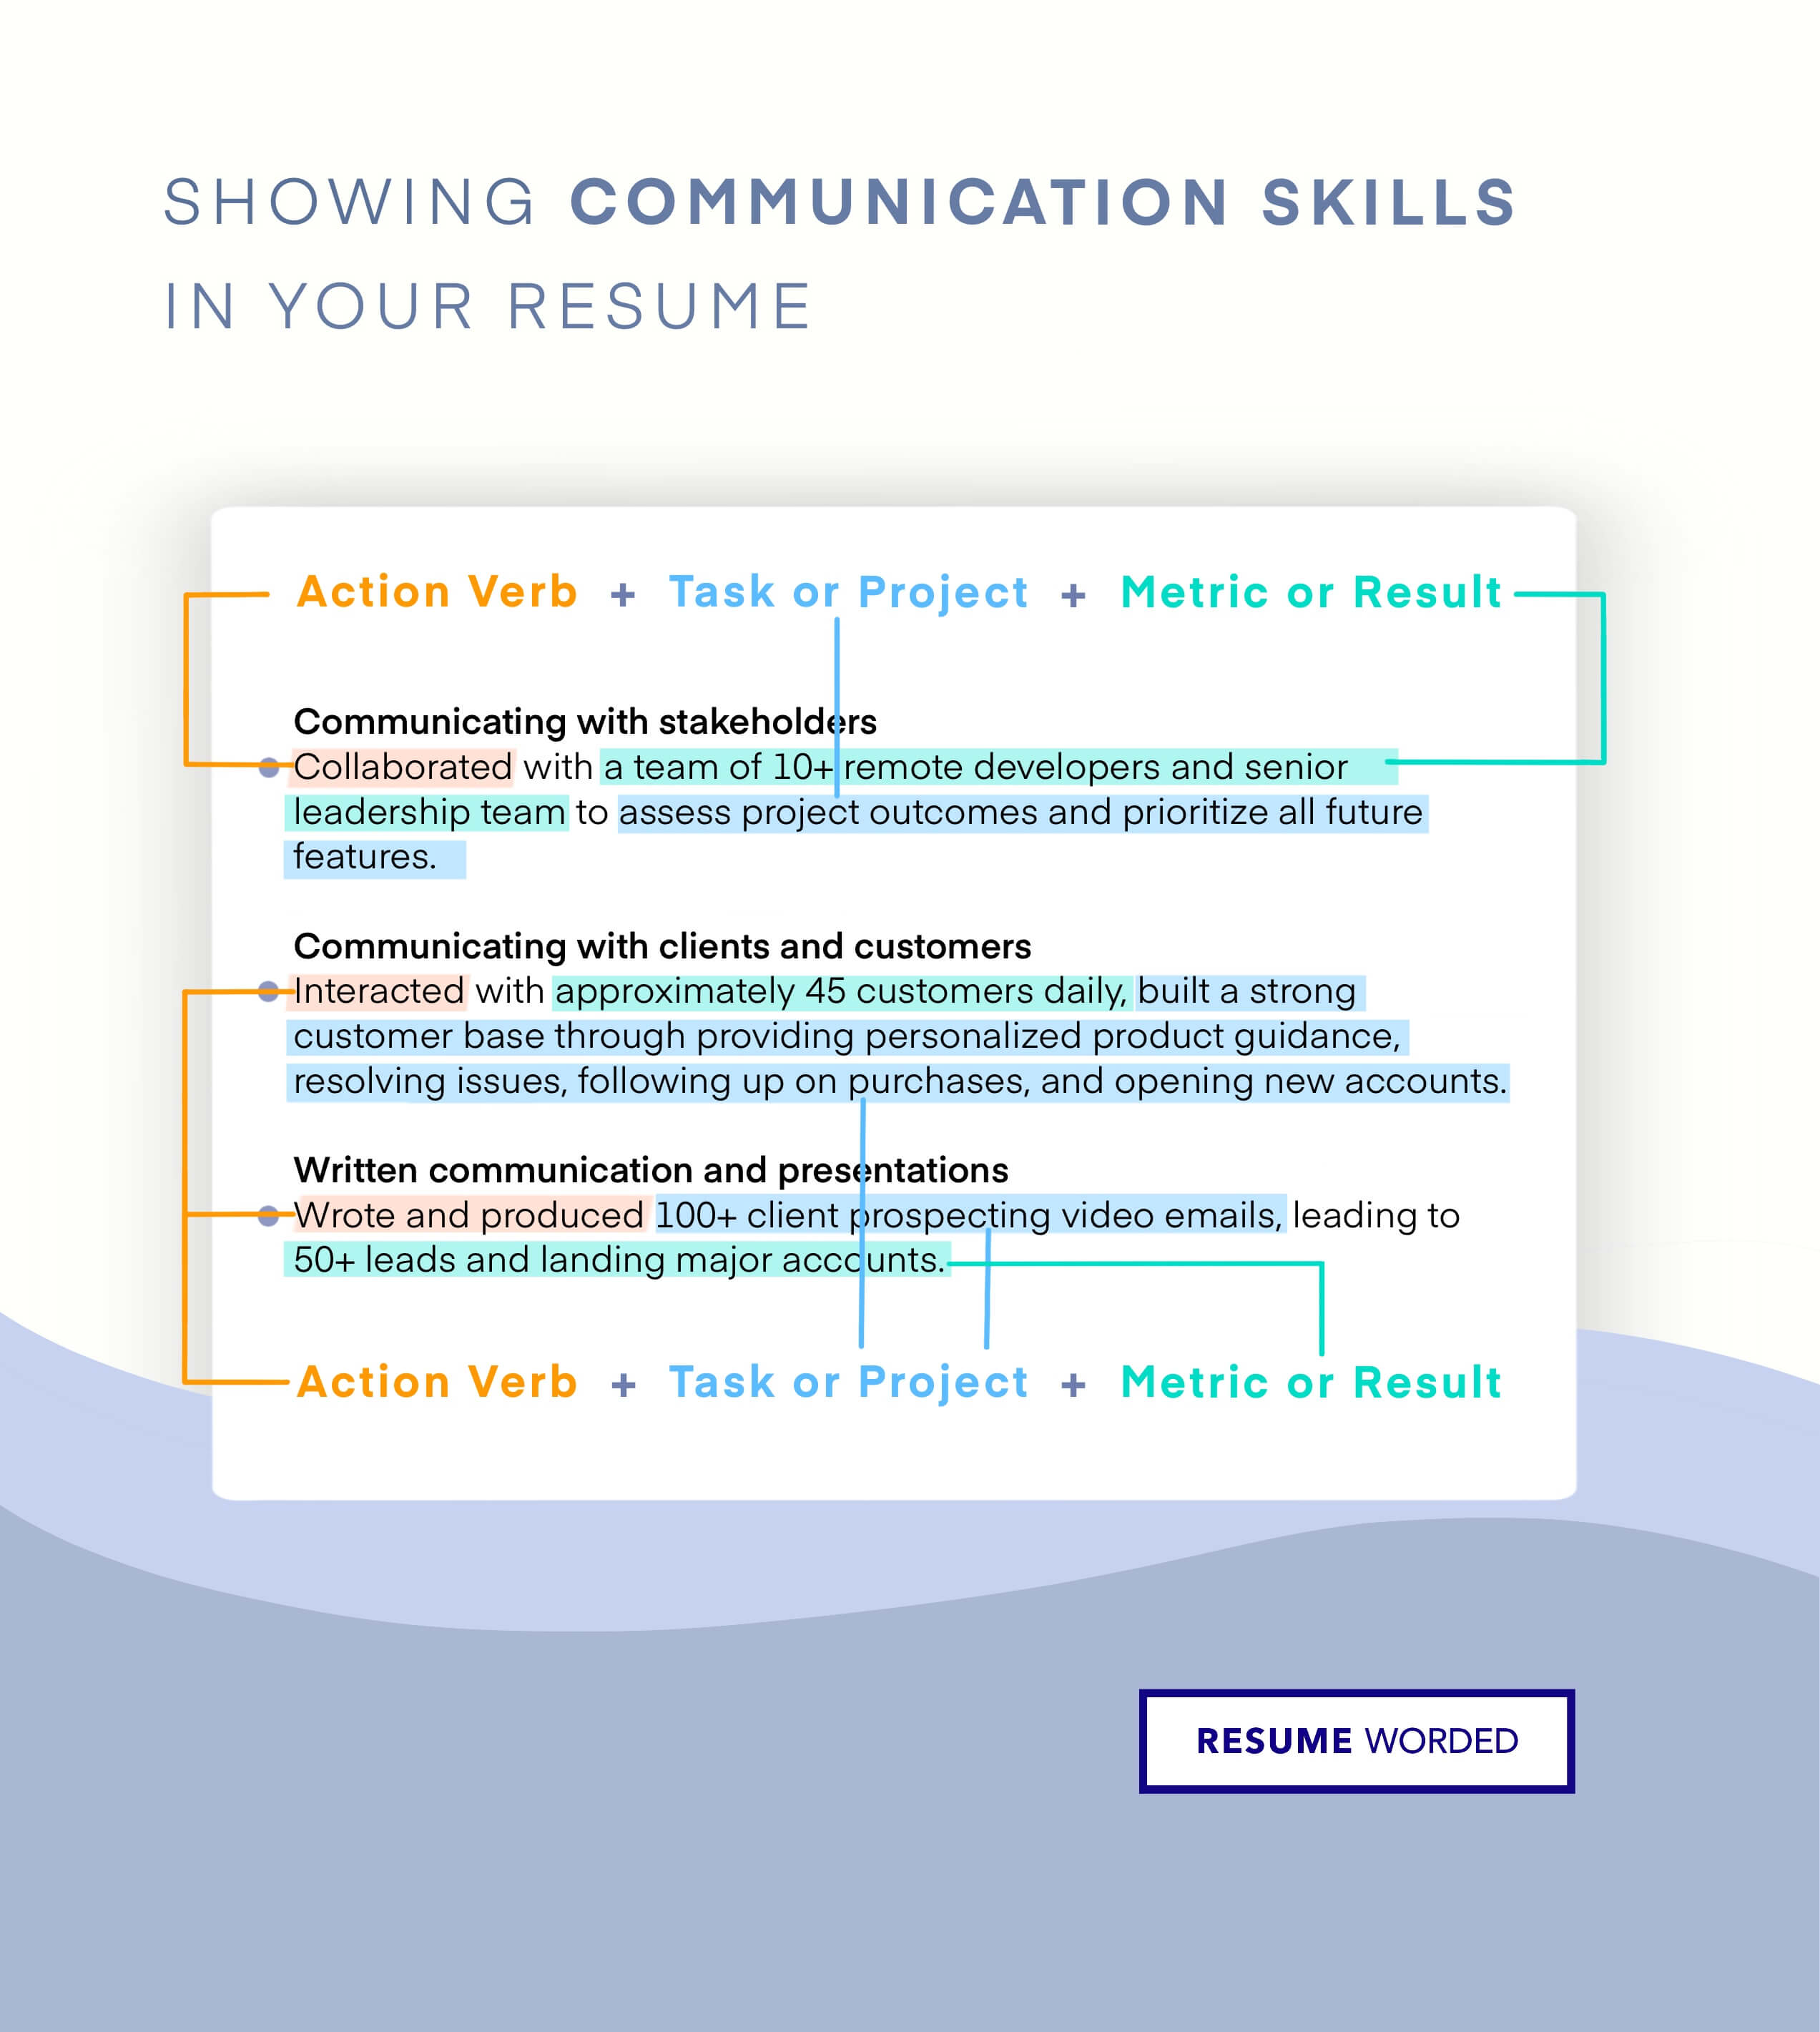 Showcase your digital communication skills - Marketing Communications Manager CV